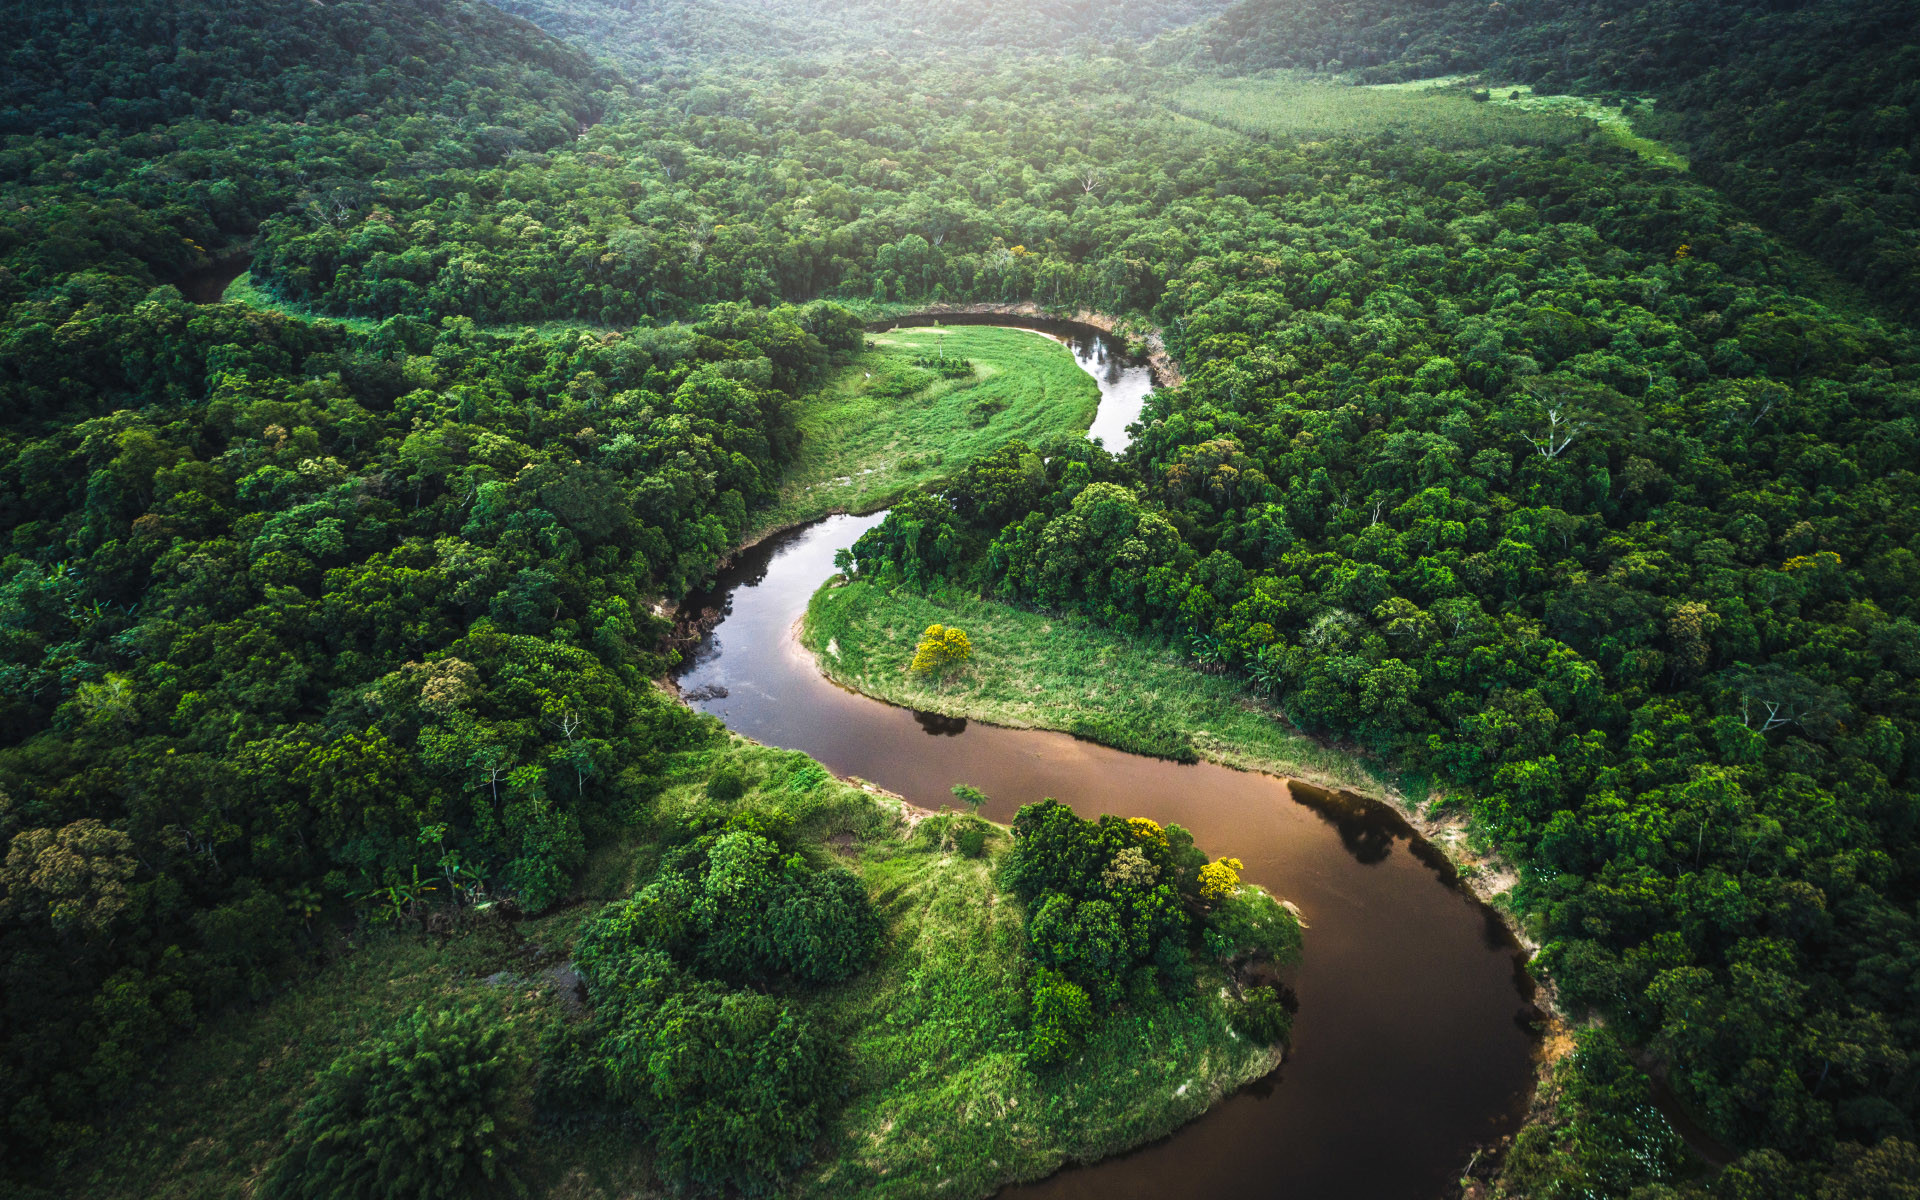 Amazon Rainforest Wallpaper